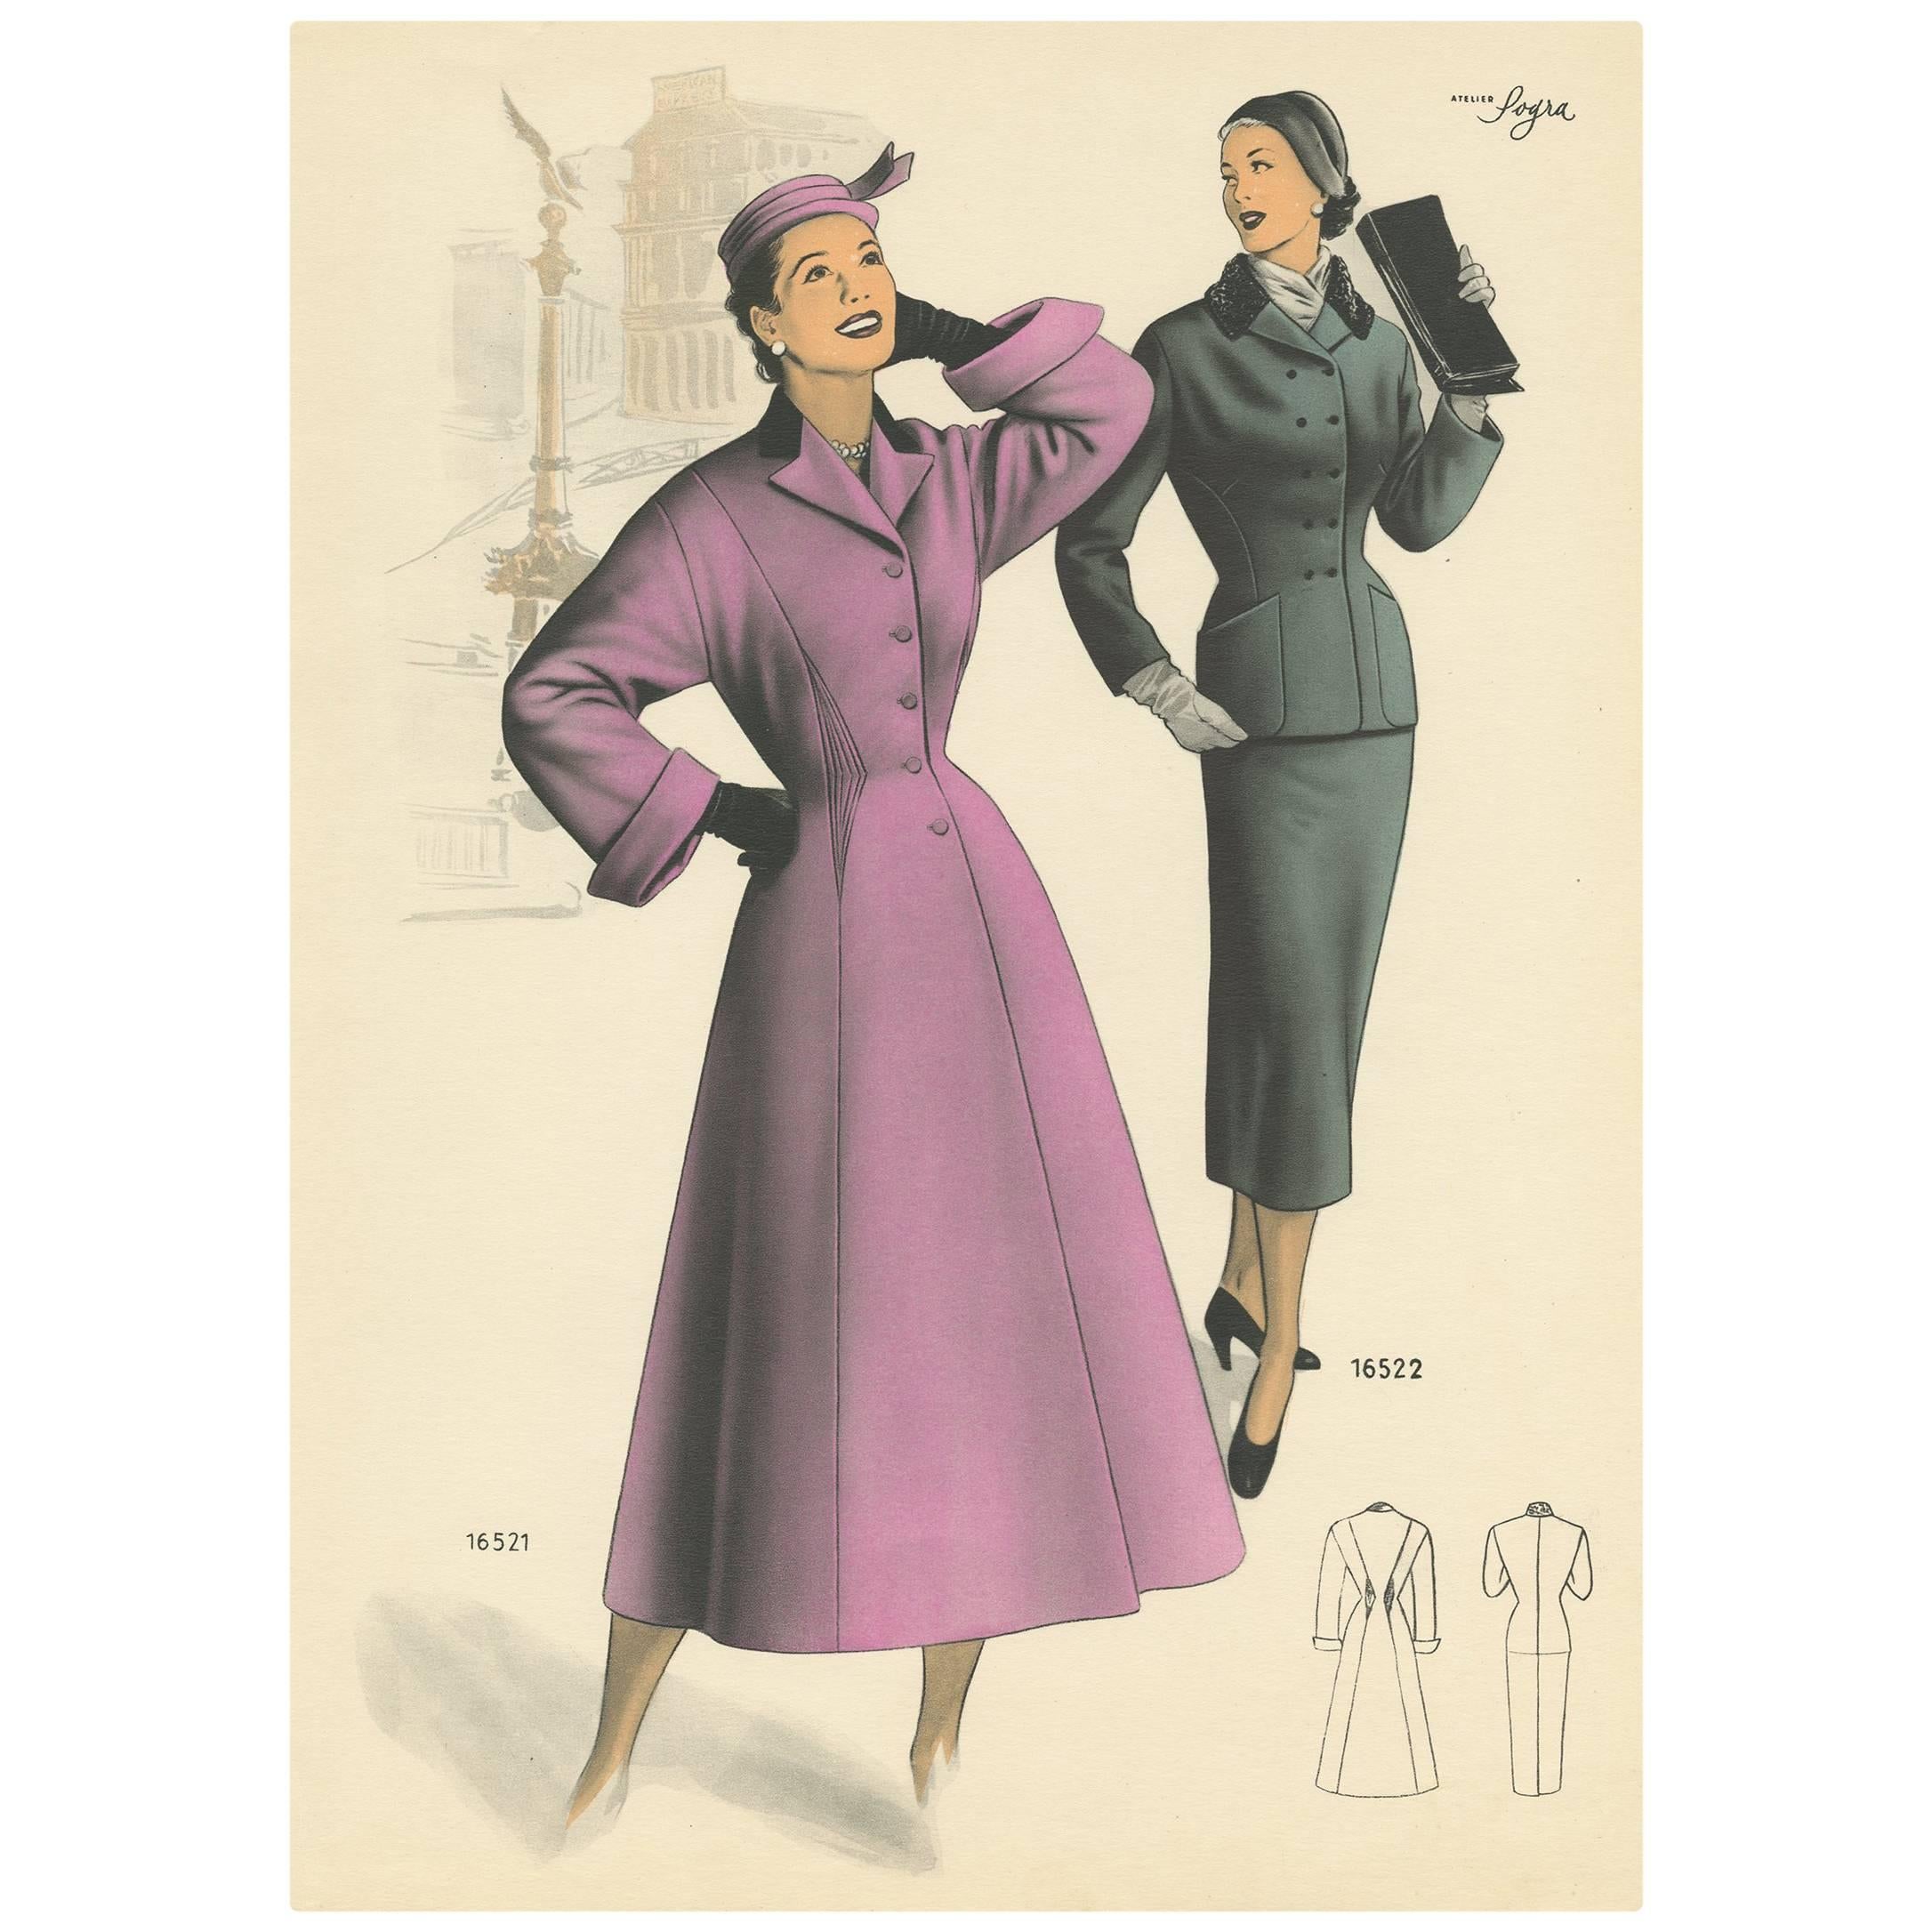 Vintage Fashion Print 'Pl. 16521' Published in Le Tailleur Moderne, 1954 For Sale